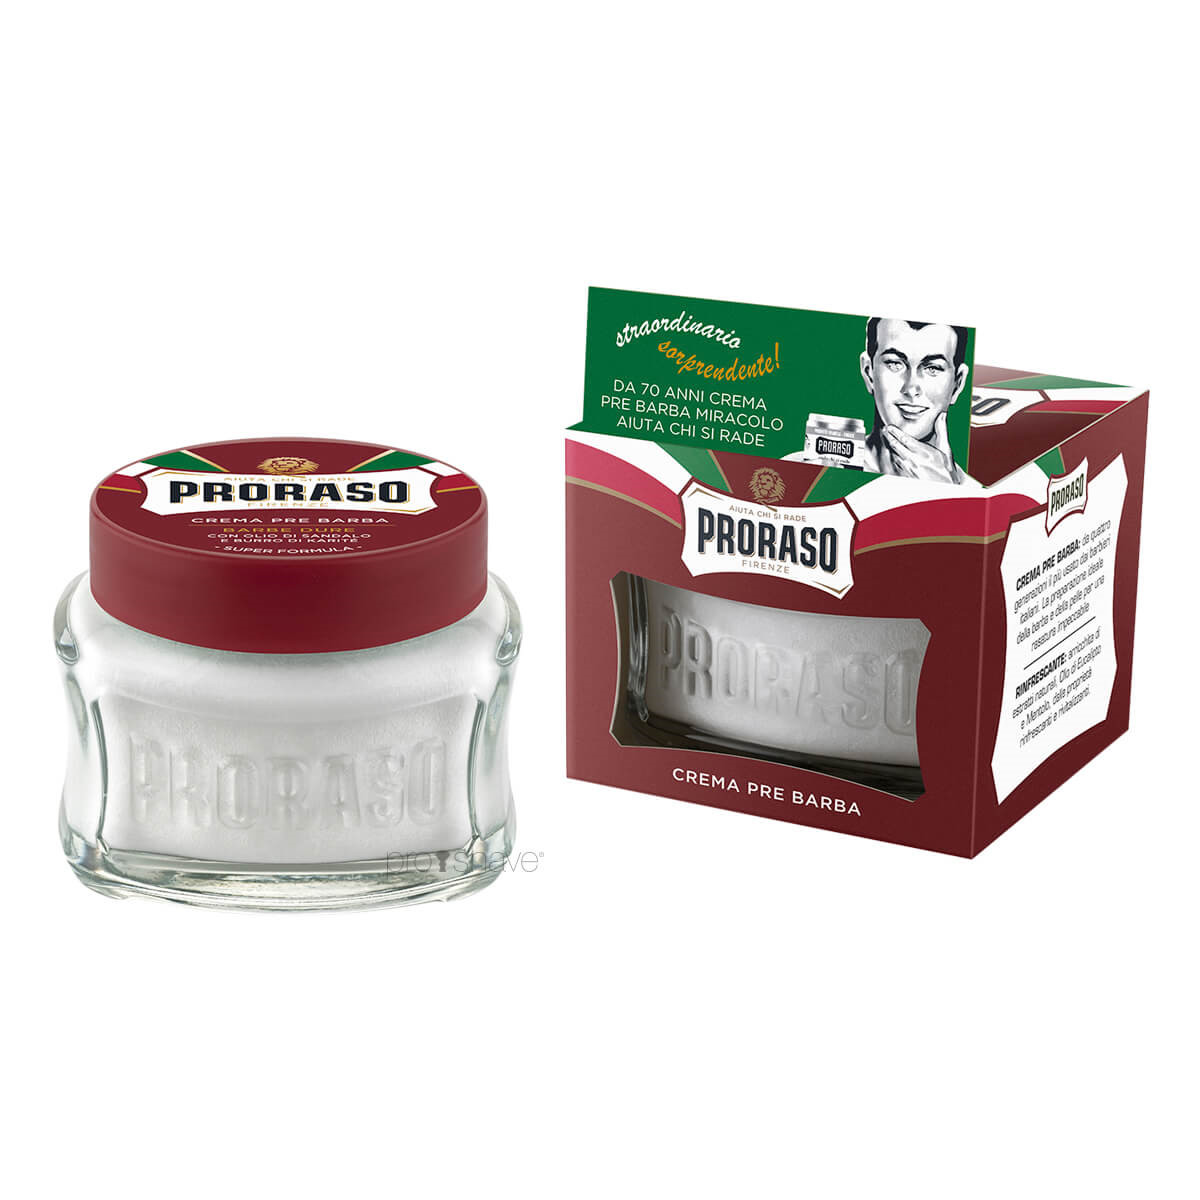 Se Proraso Preshave Cream - Nourishing, Sandeltræsolie og Sheasmør, 100 ml. hos Proshave